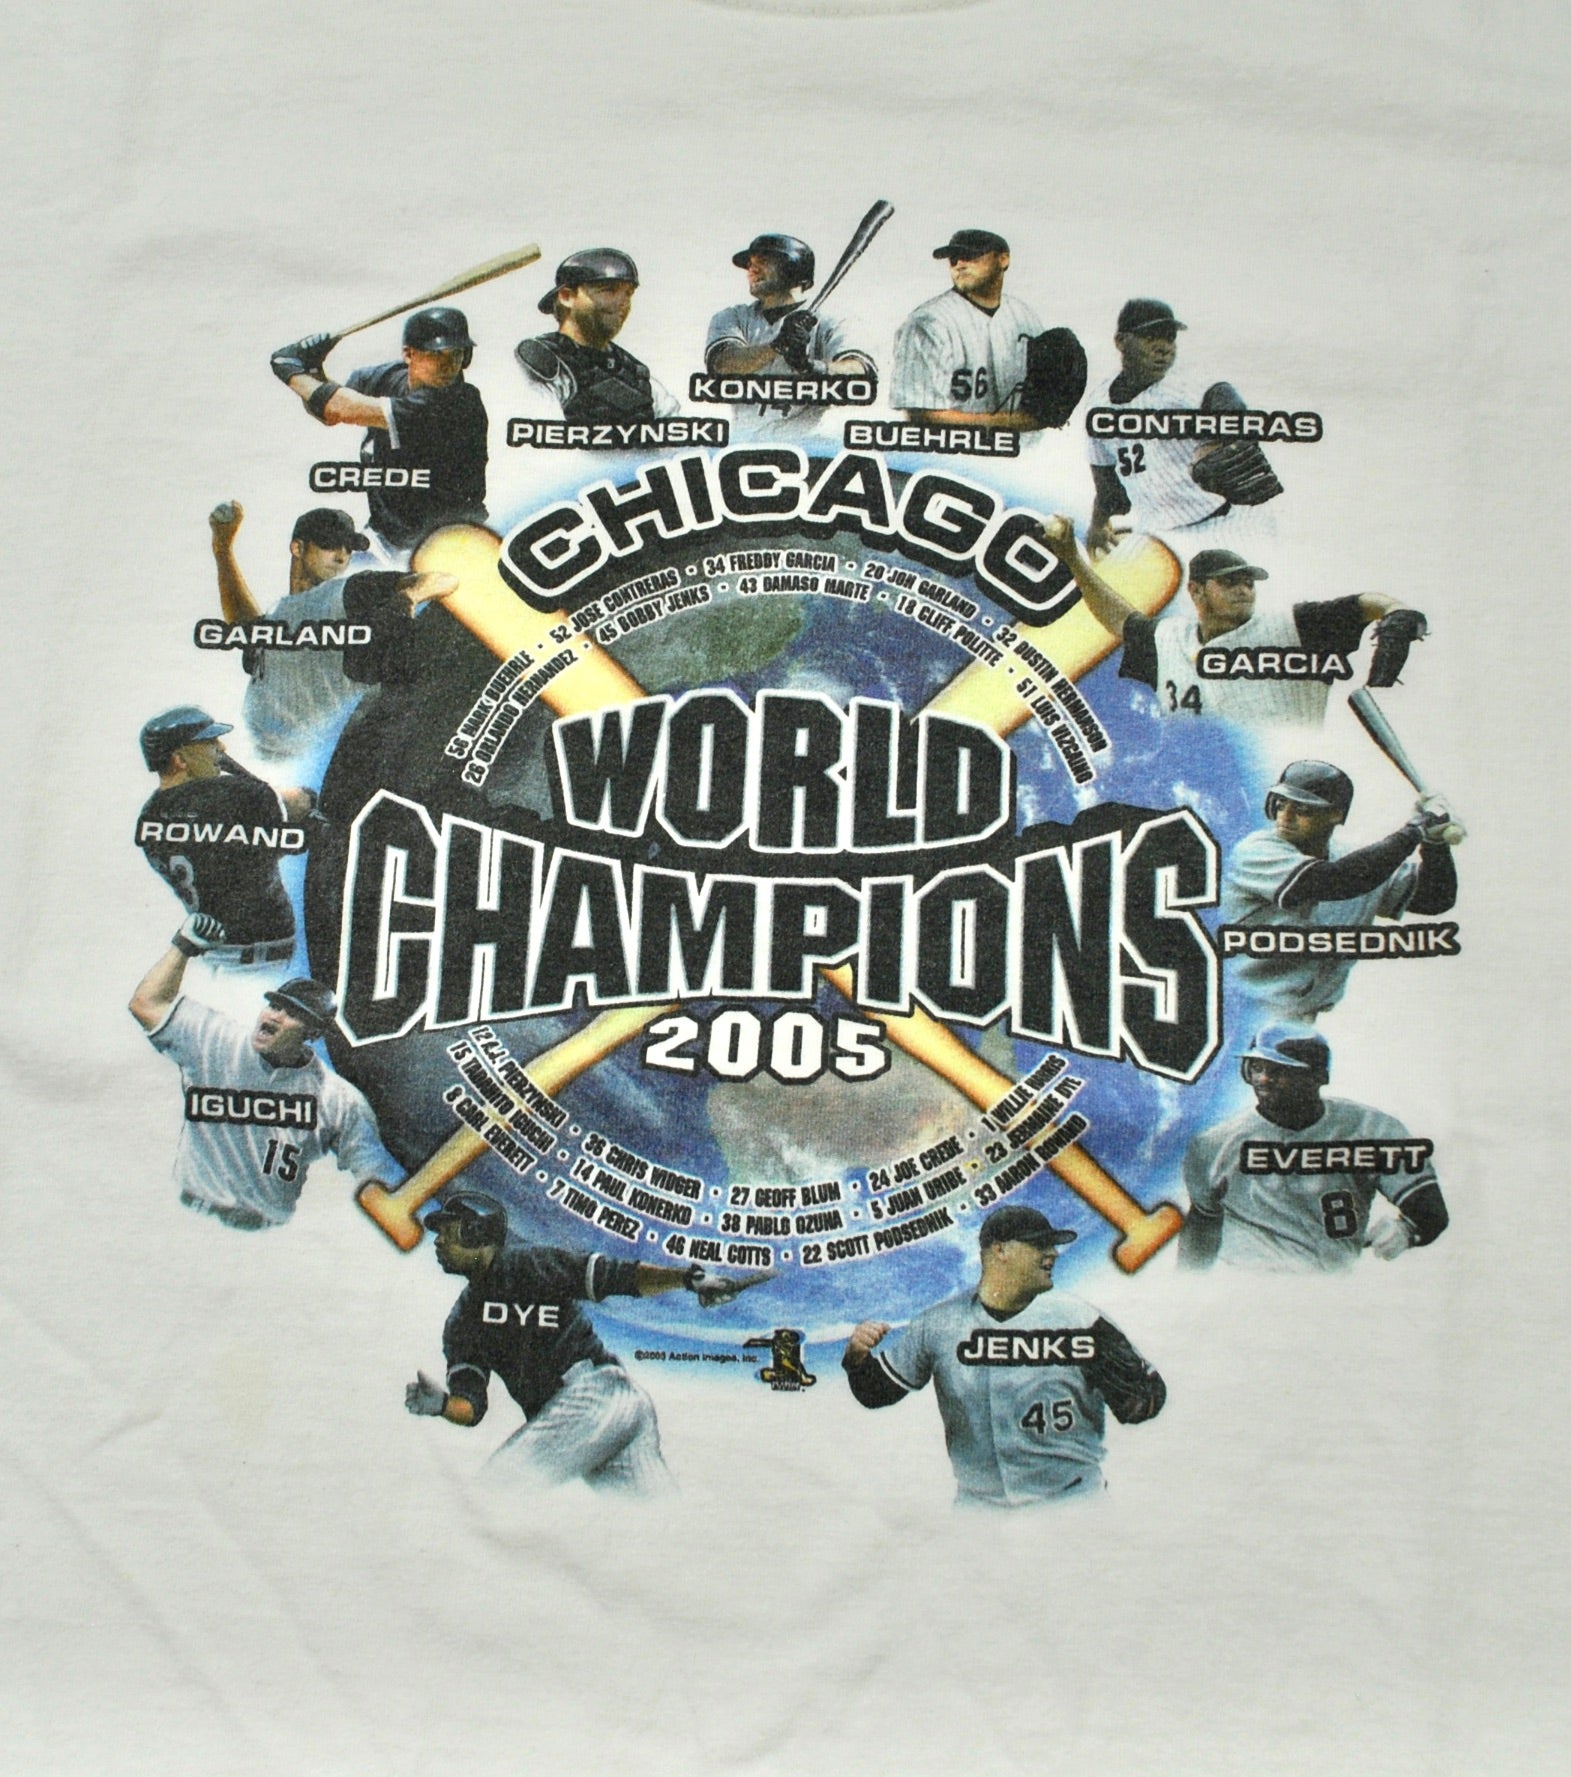 2005 Houston Astros vs Chicago White Sox Baseball World Series T-Shirt XL  As Is